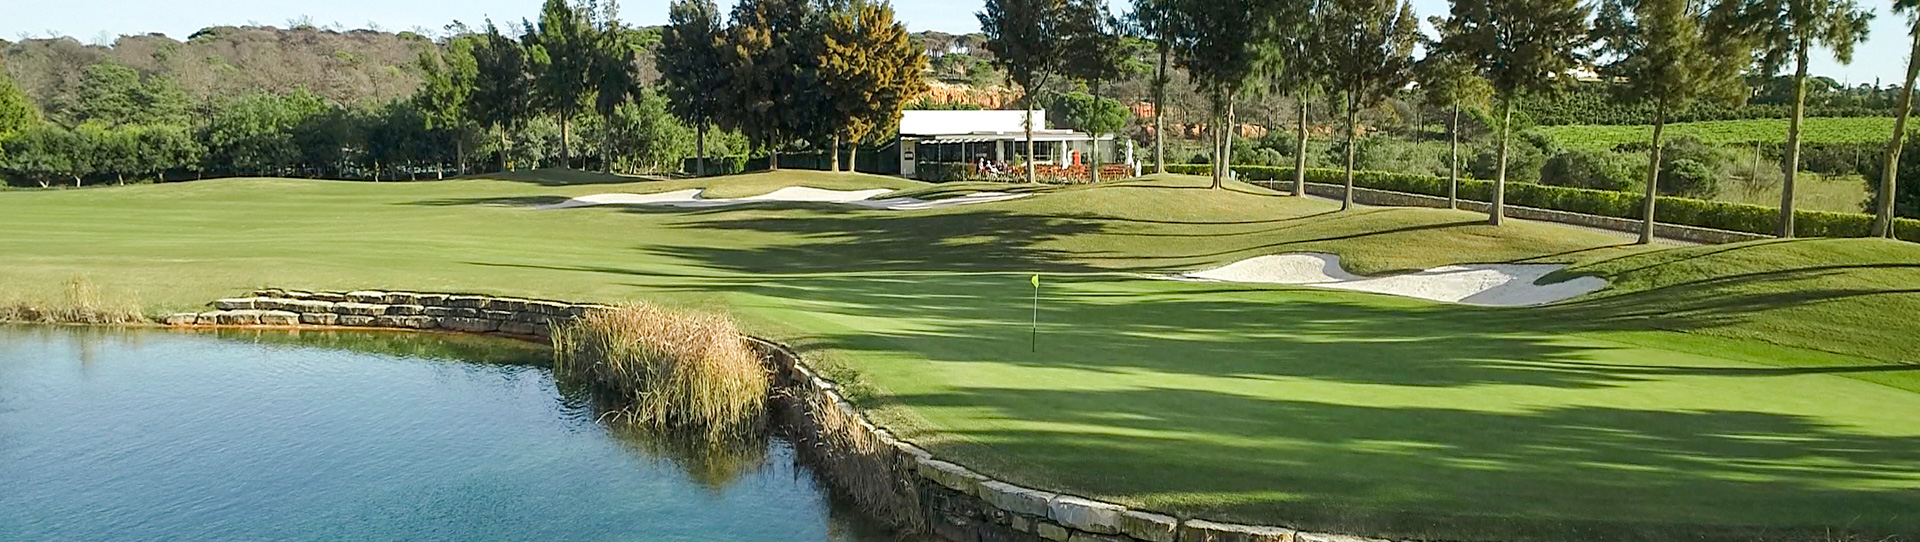 Portugal golf courses - Laranjal Golf Course - Photo 2